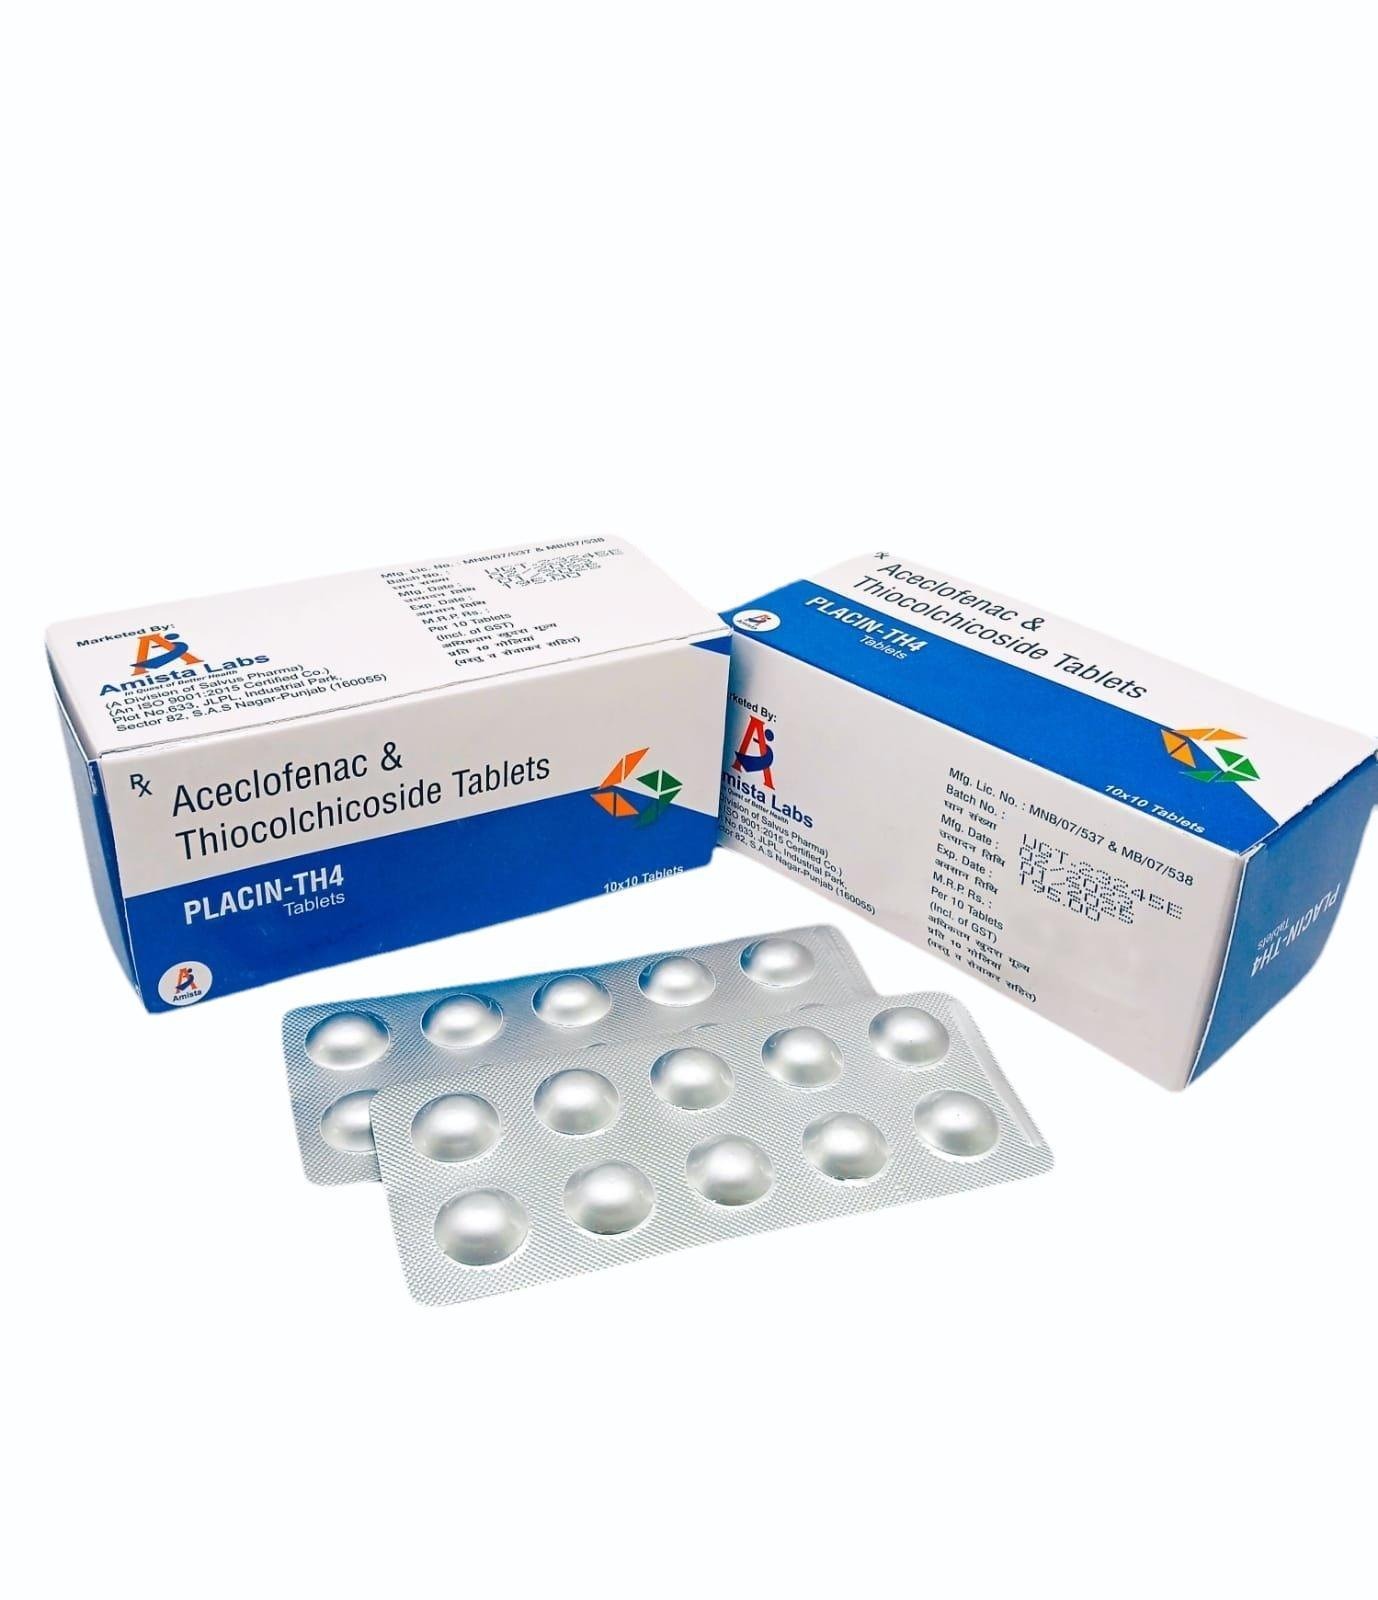 Placin-TH4 Tablets